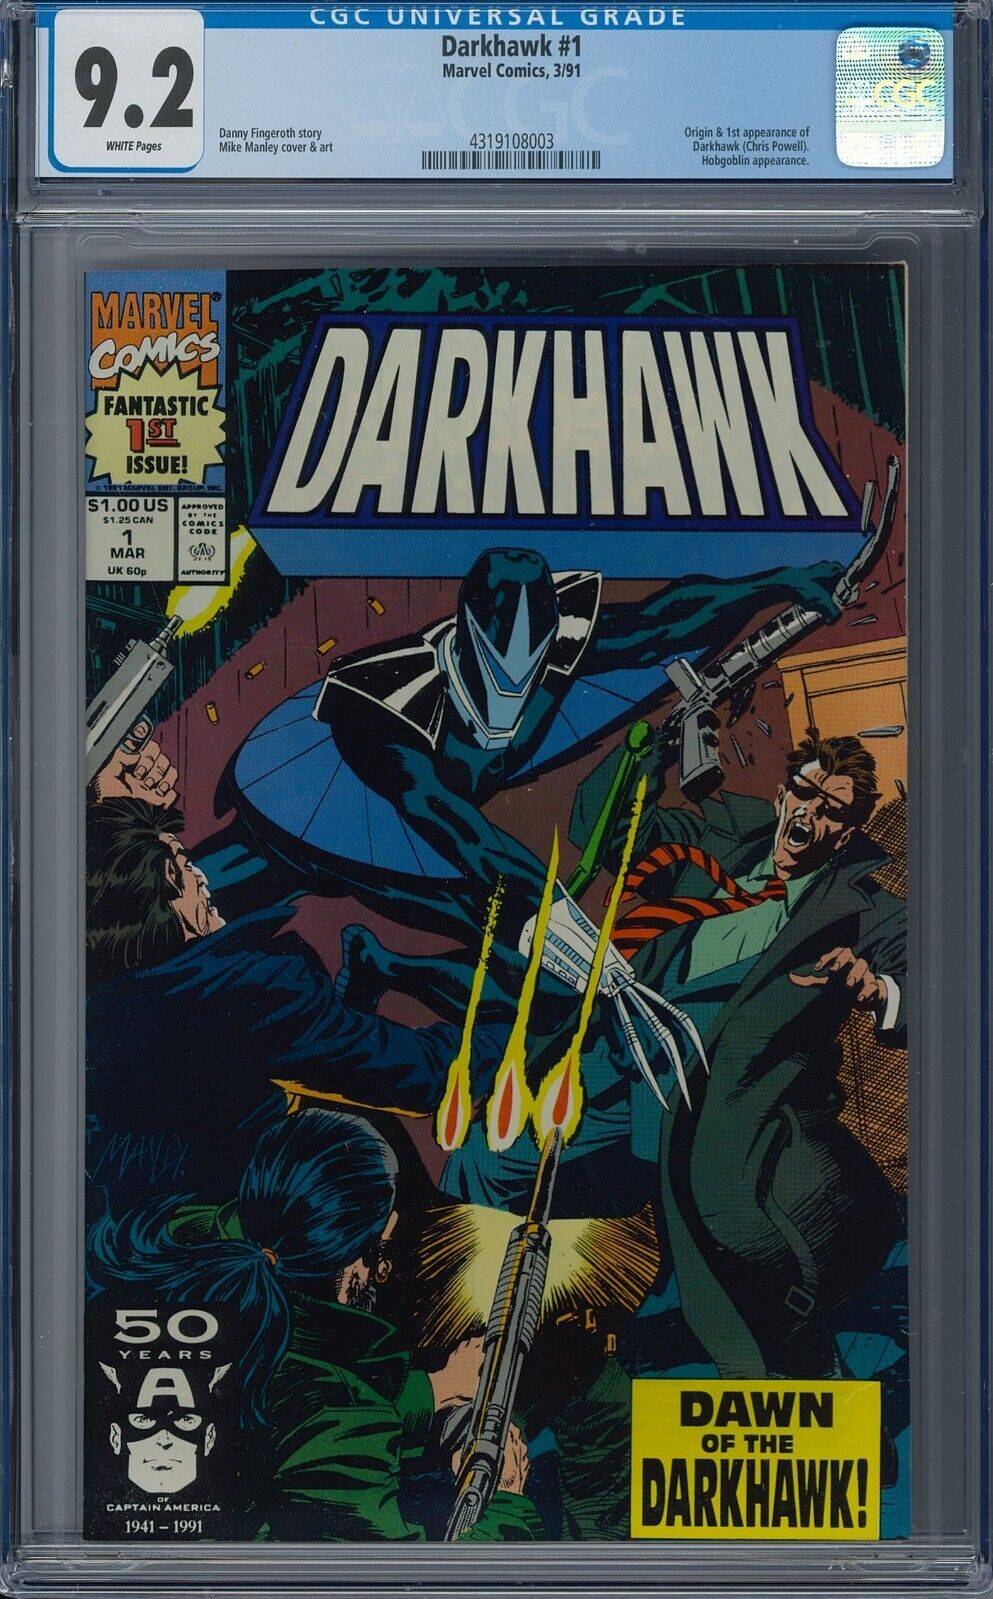 Darkhawk #1 Vol 1 (1991) CGC 9.2 1st Darkhawk Marvel